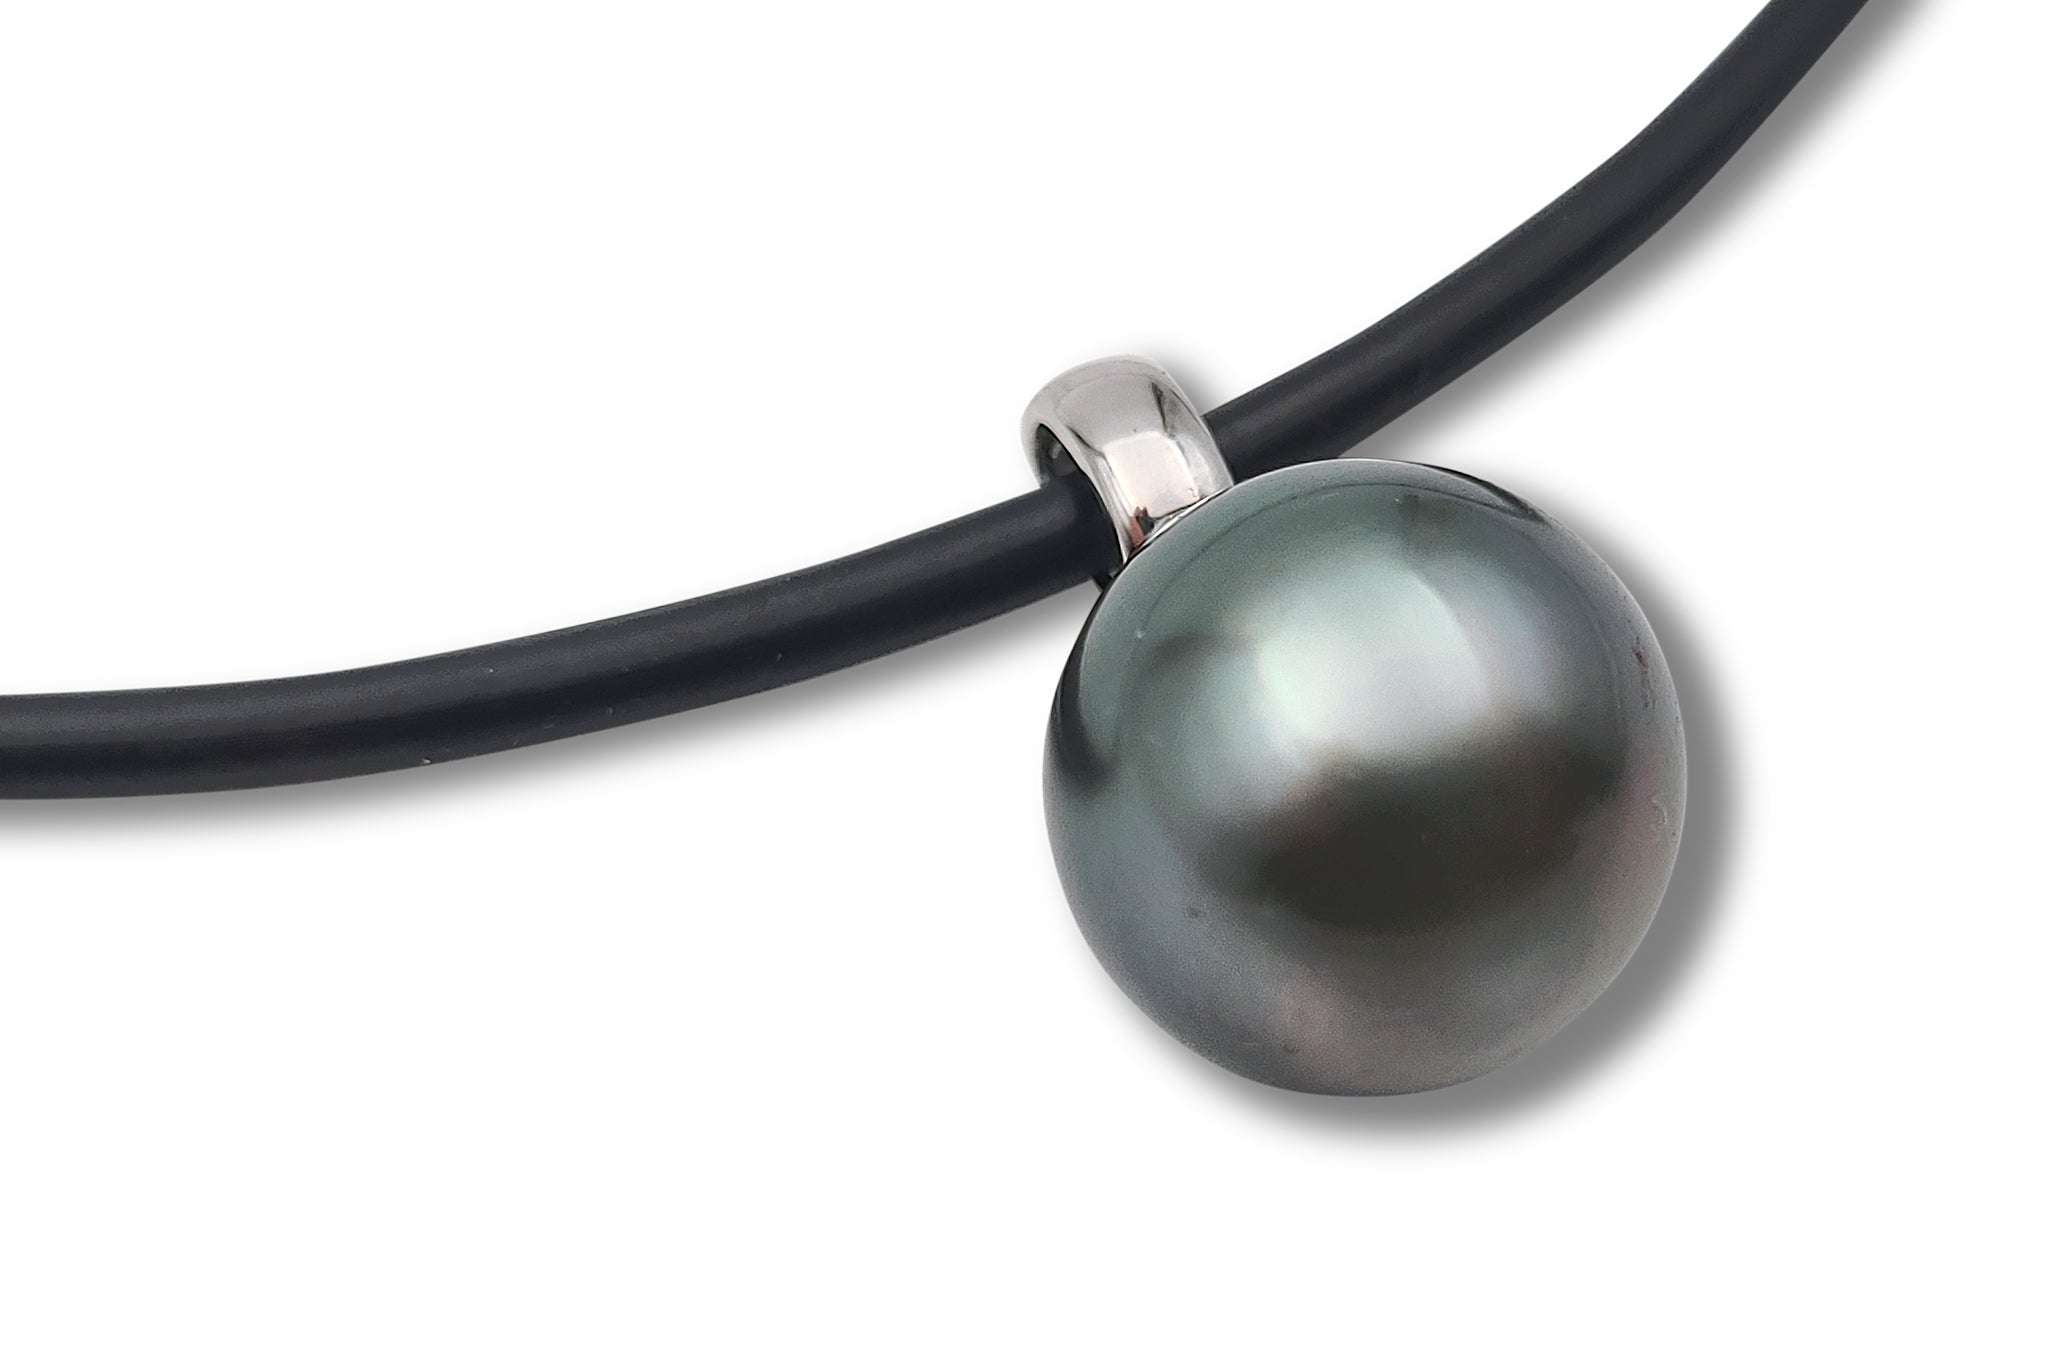 Grosse silbergraue Tahiti Perle an silbernem Anhänger an schwarzem Kautschukband, Nahaufnahme. Schöner tiefer Lüster